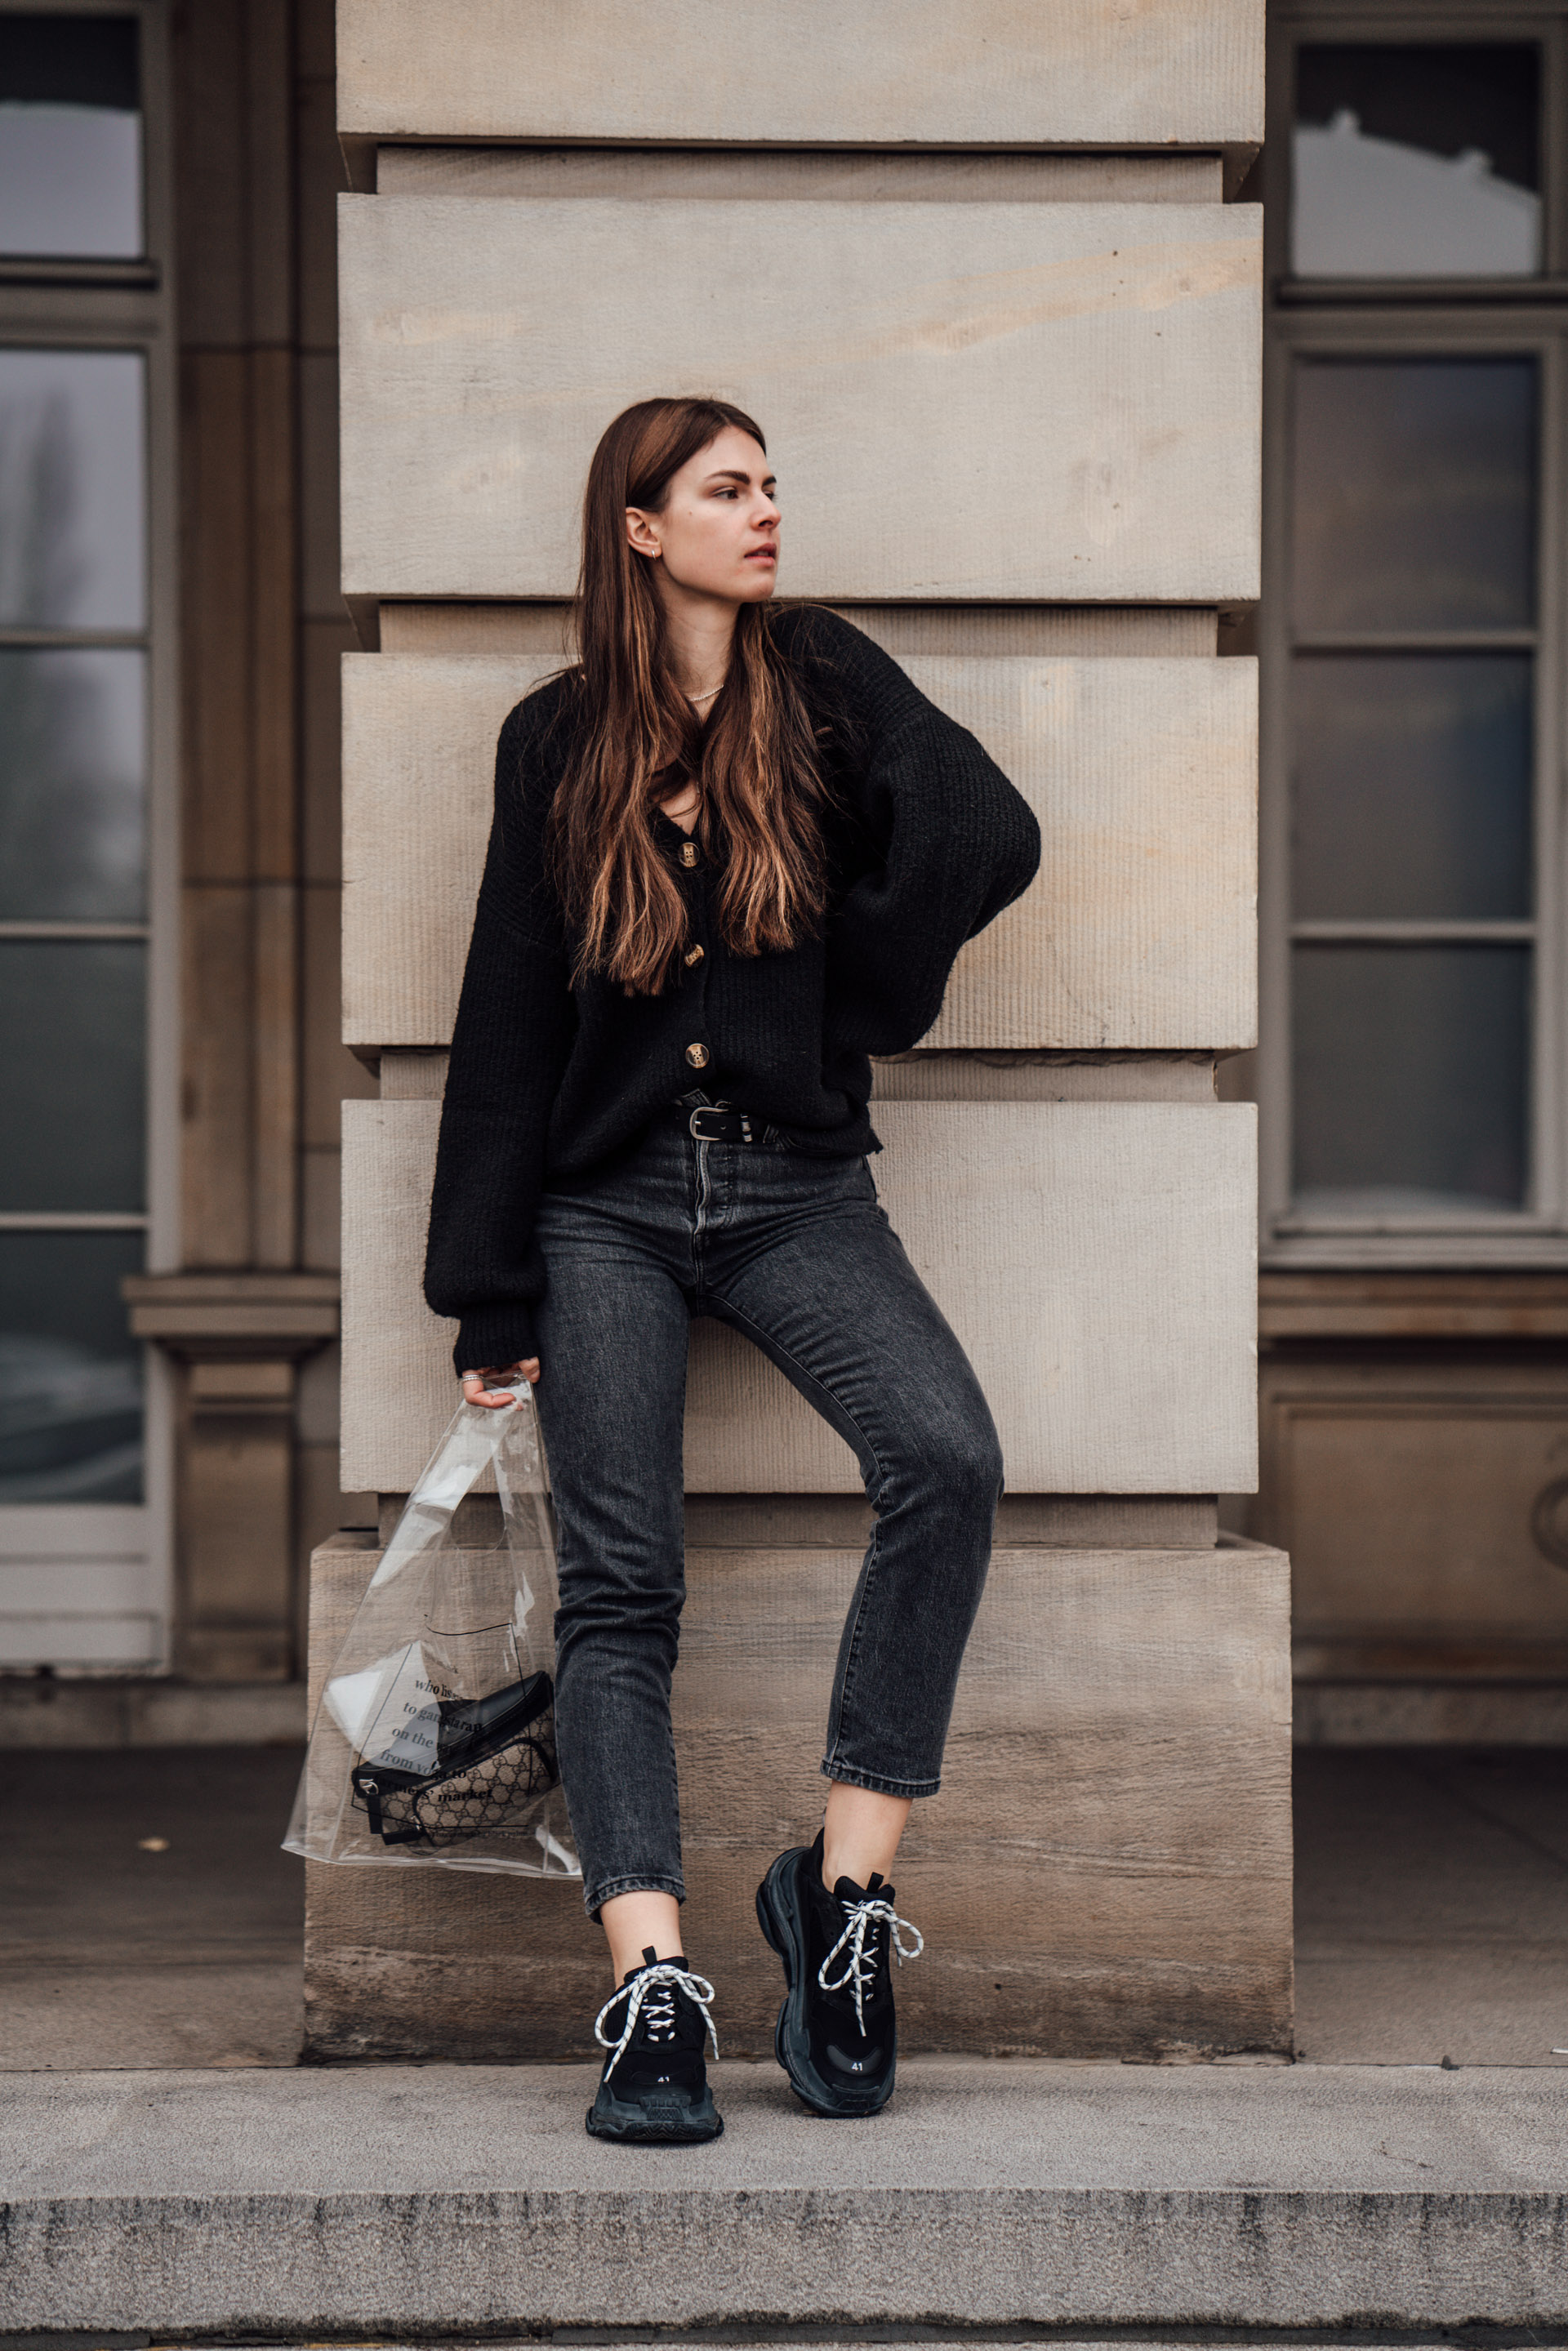 Bag Trend 2019: Why you need a transparent bag || Fashionblog Berlin